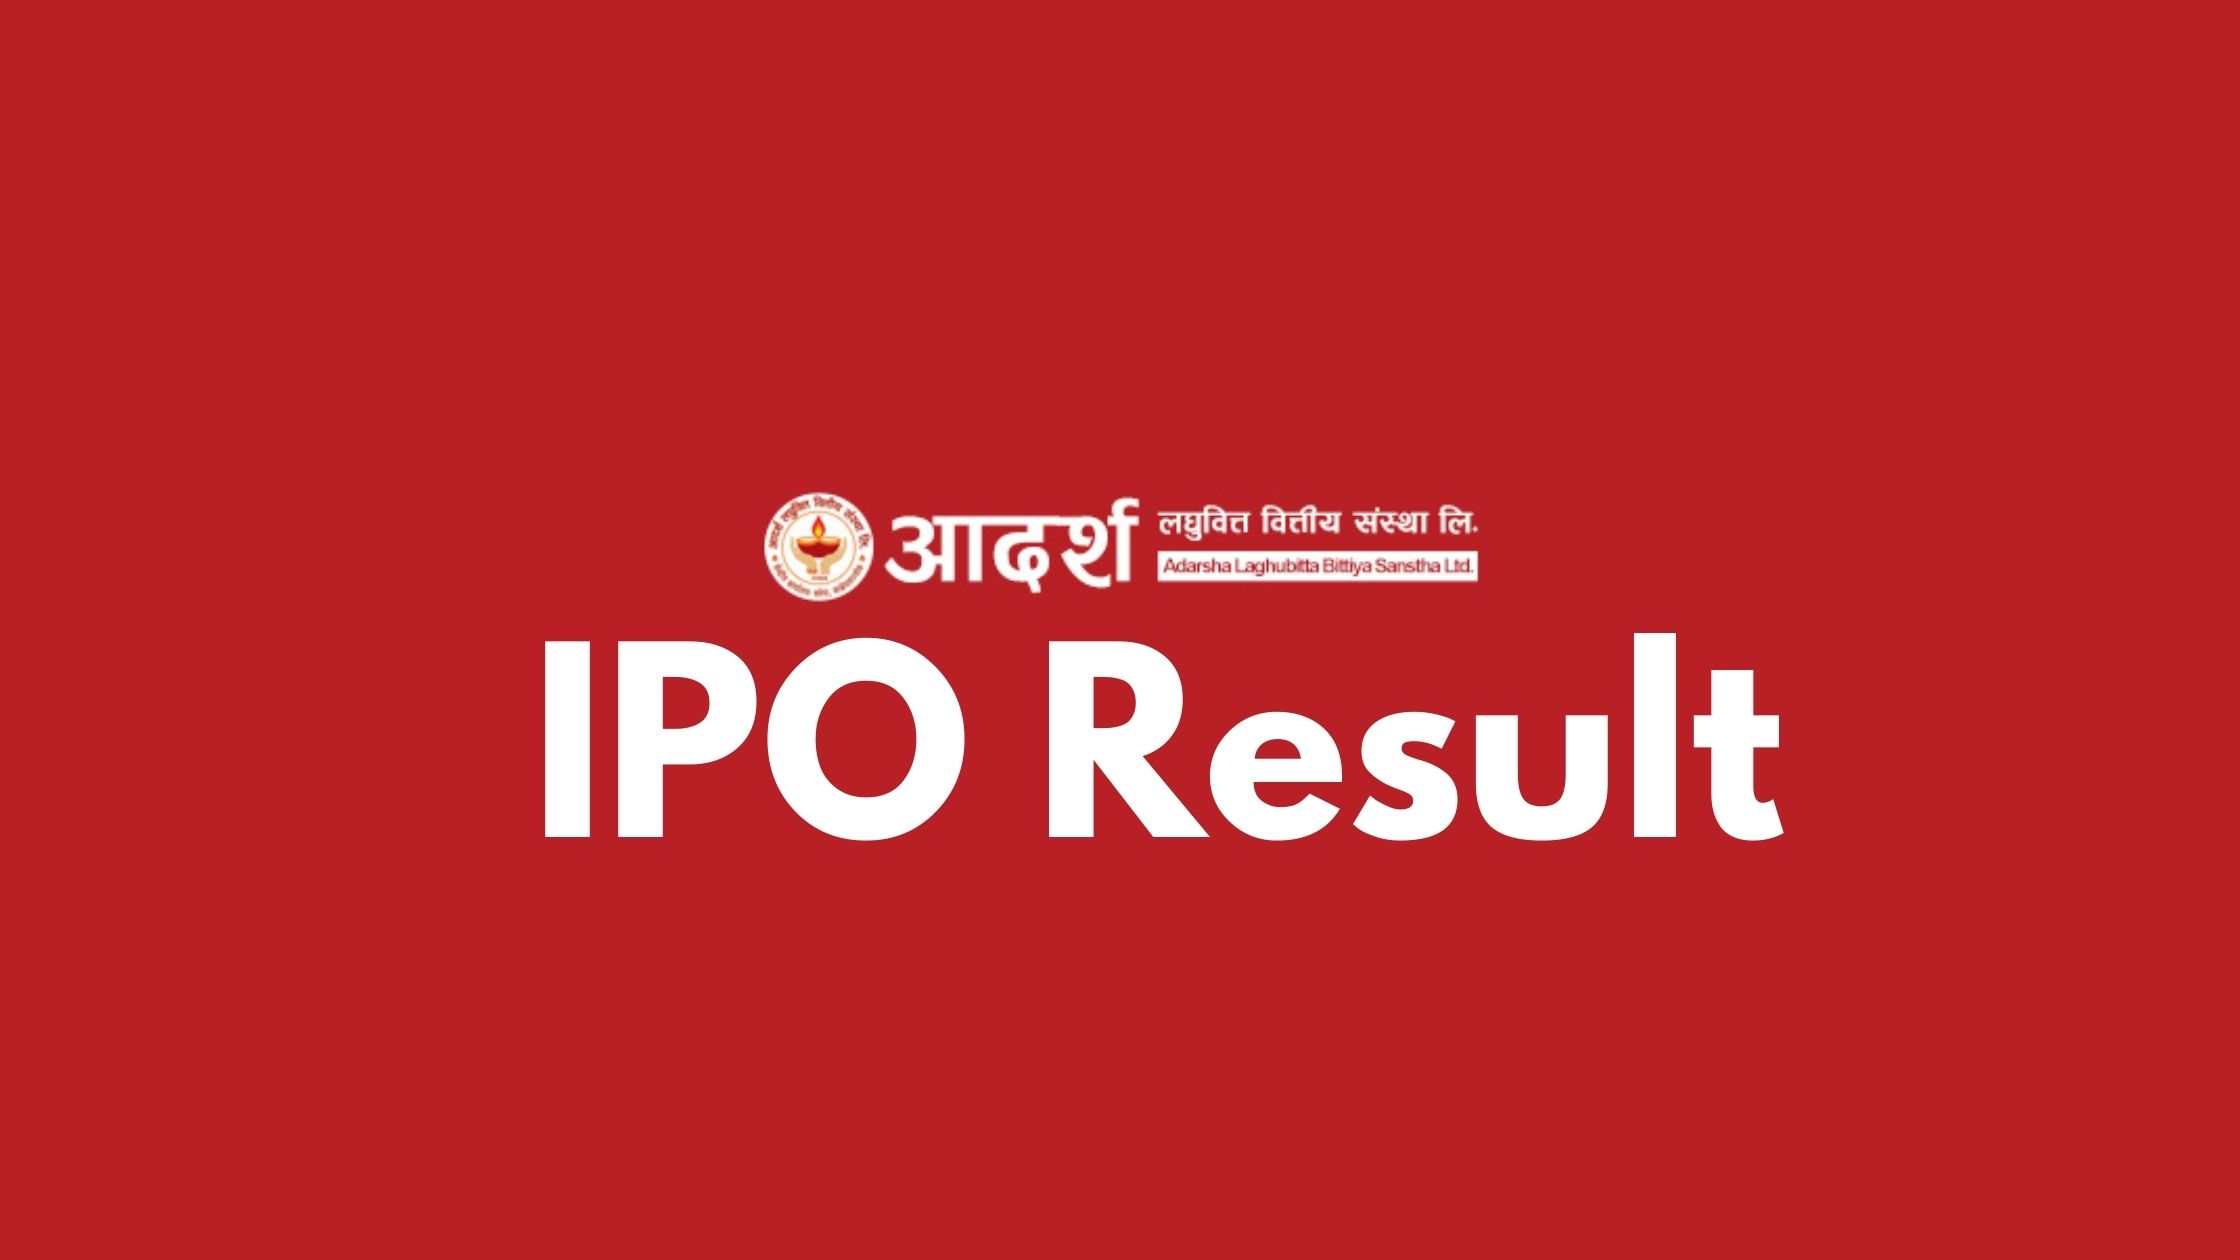 Check The Result Of Adarsha Laghubitta IPO